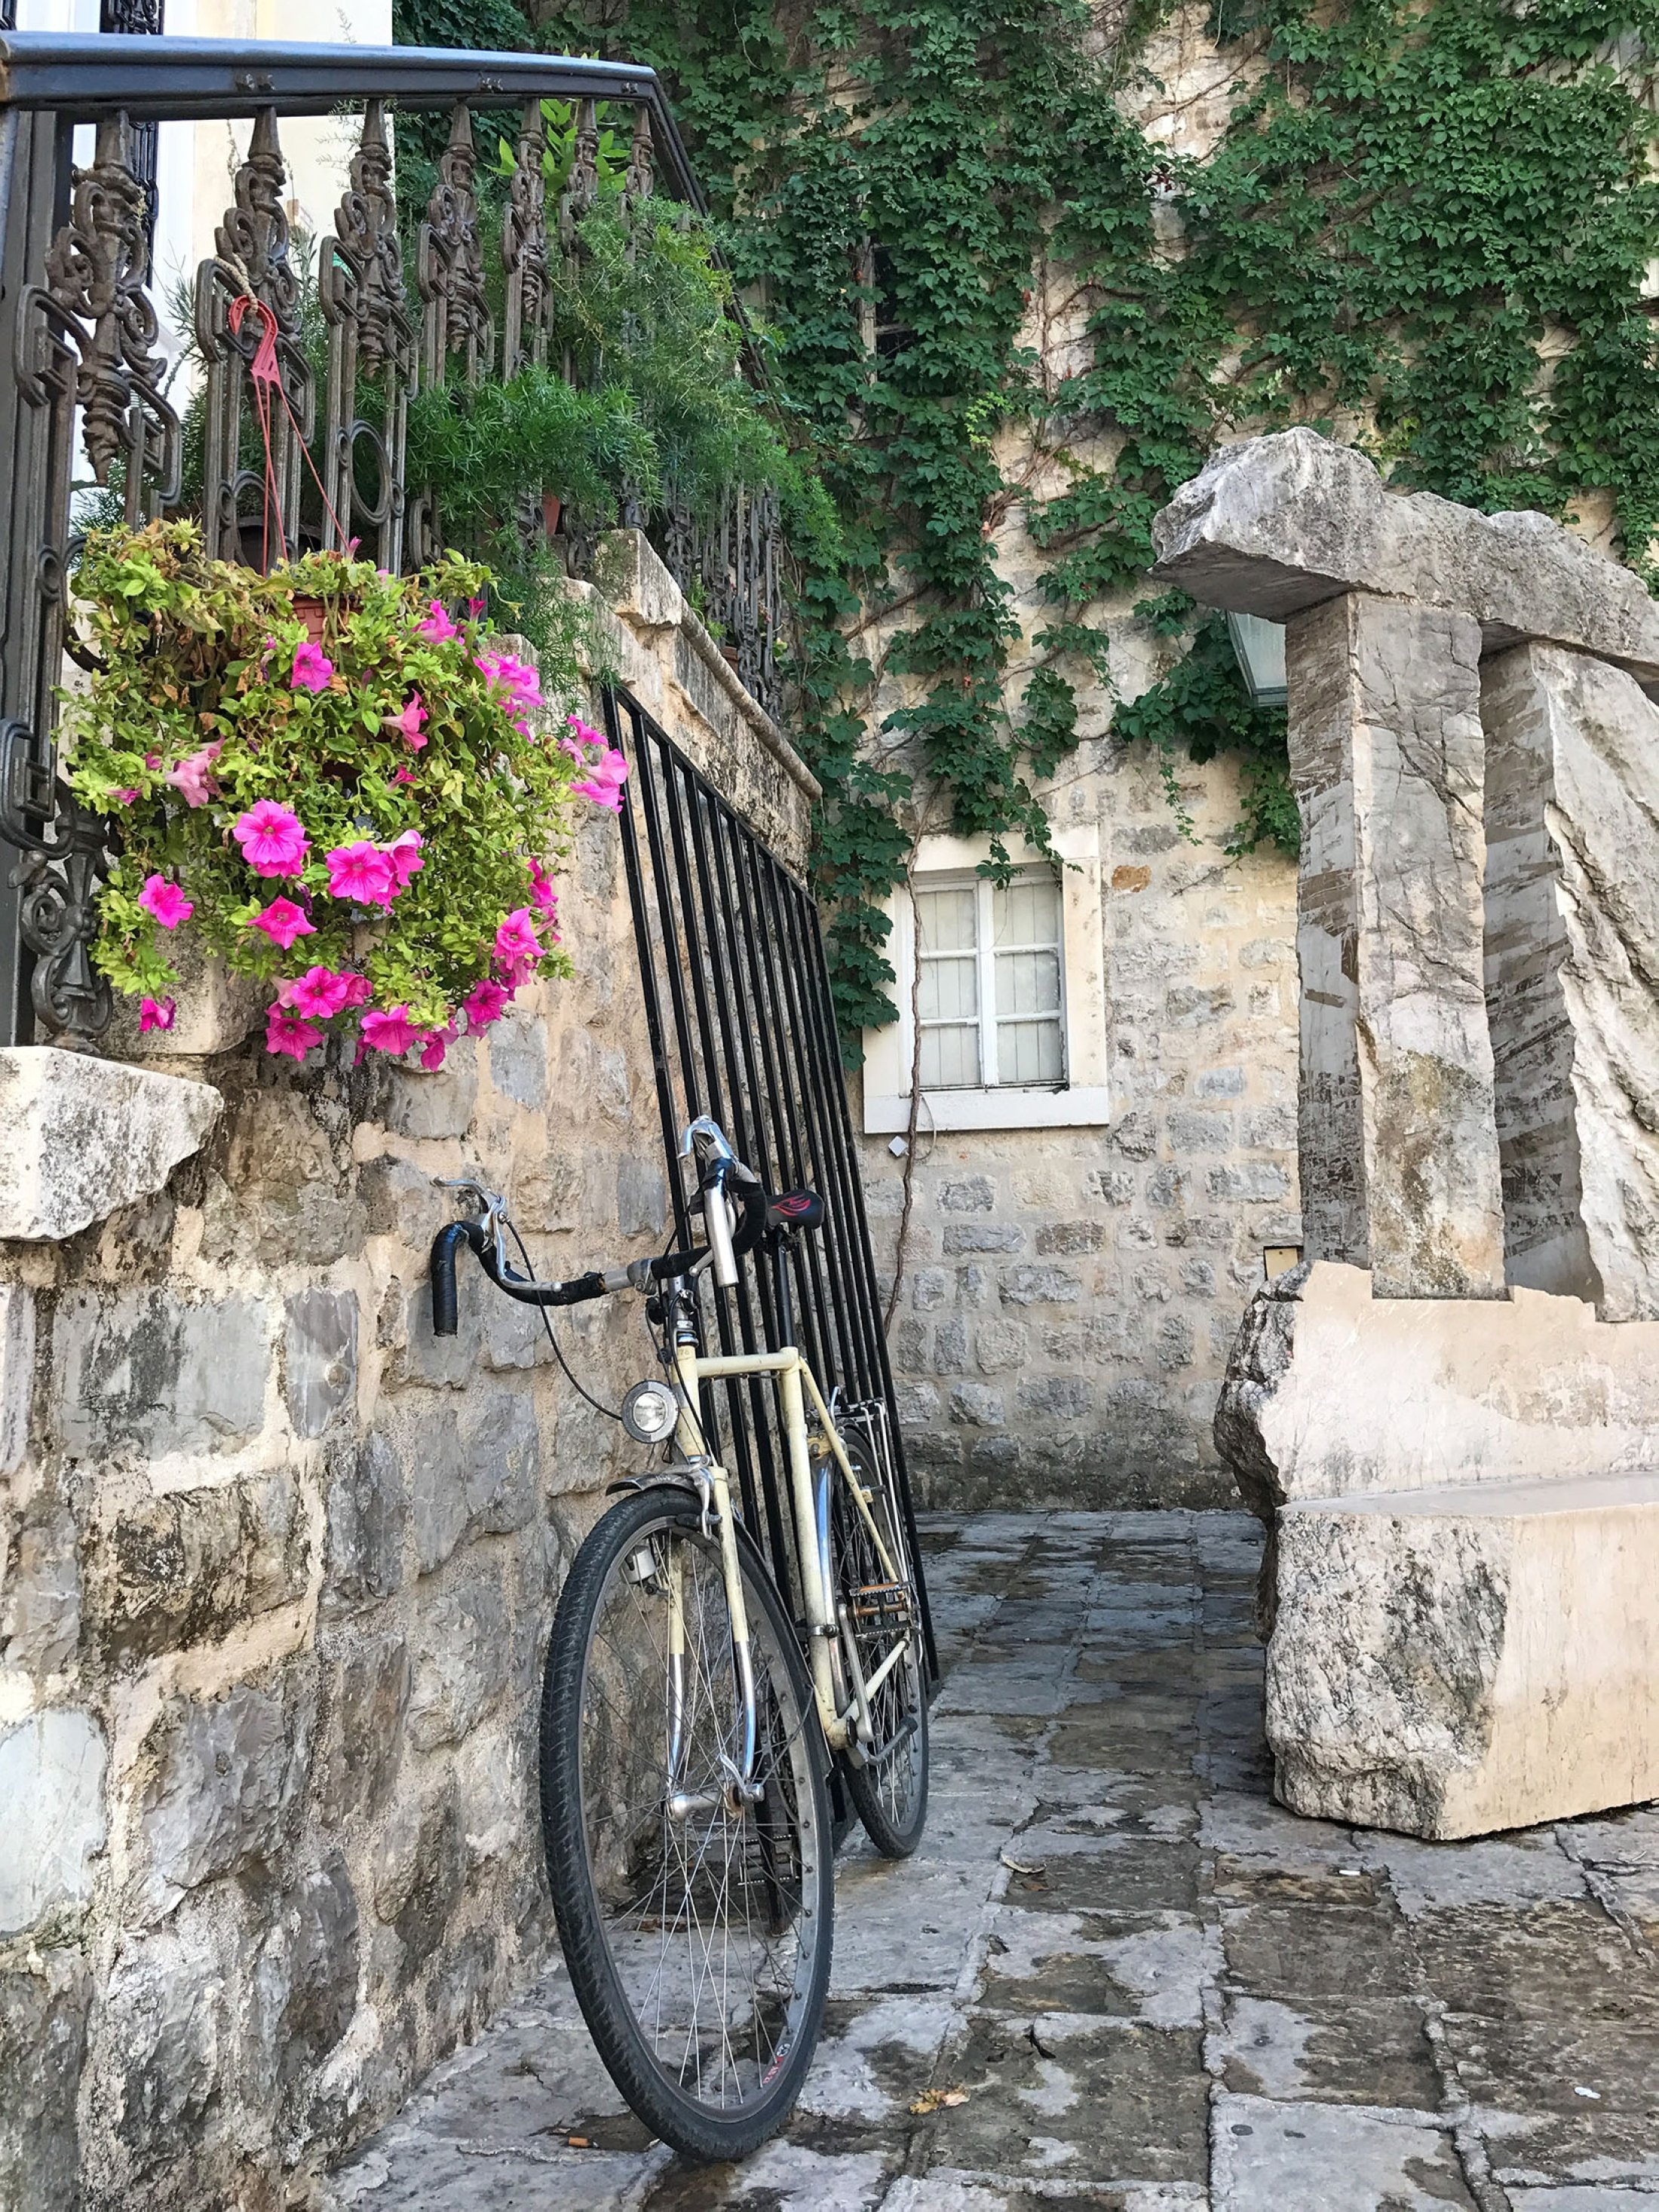 A bicycle in the Old Town, Stari Grad, in Budva, Montenegro. (Photo by Özge Şengelen)